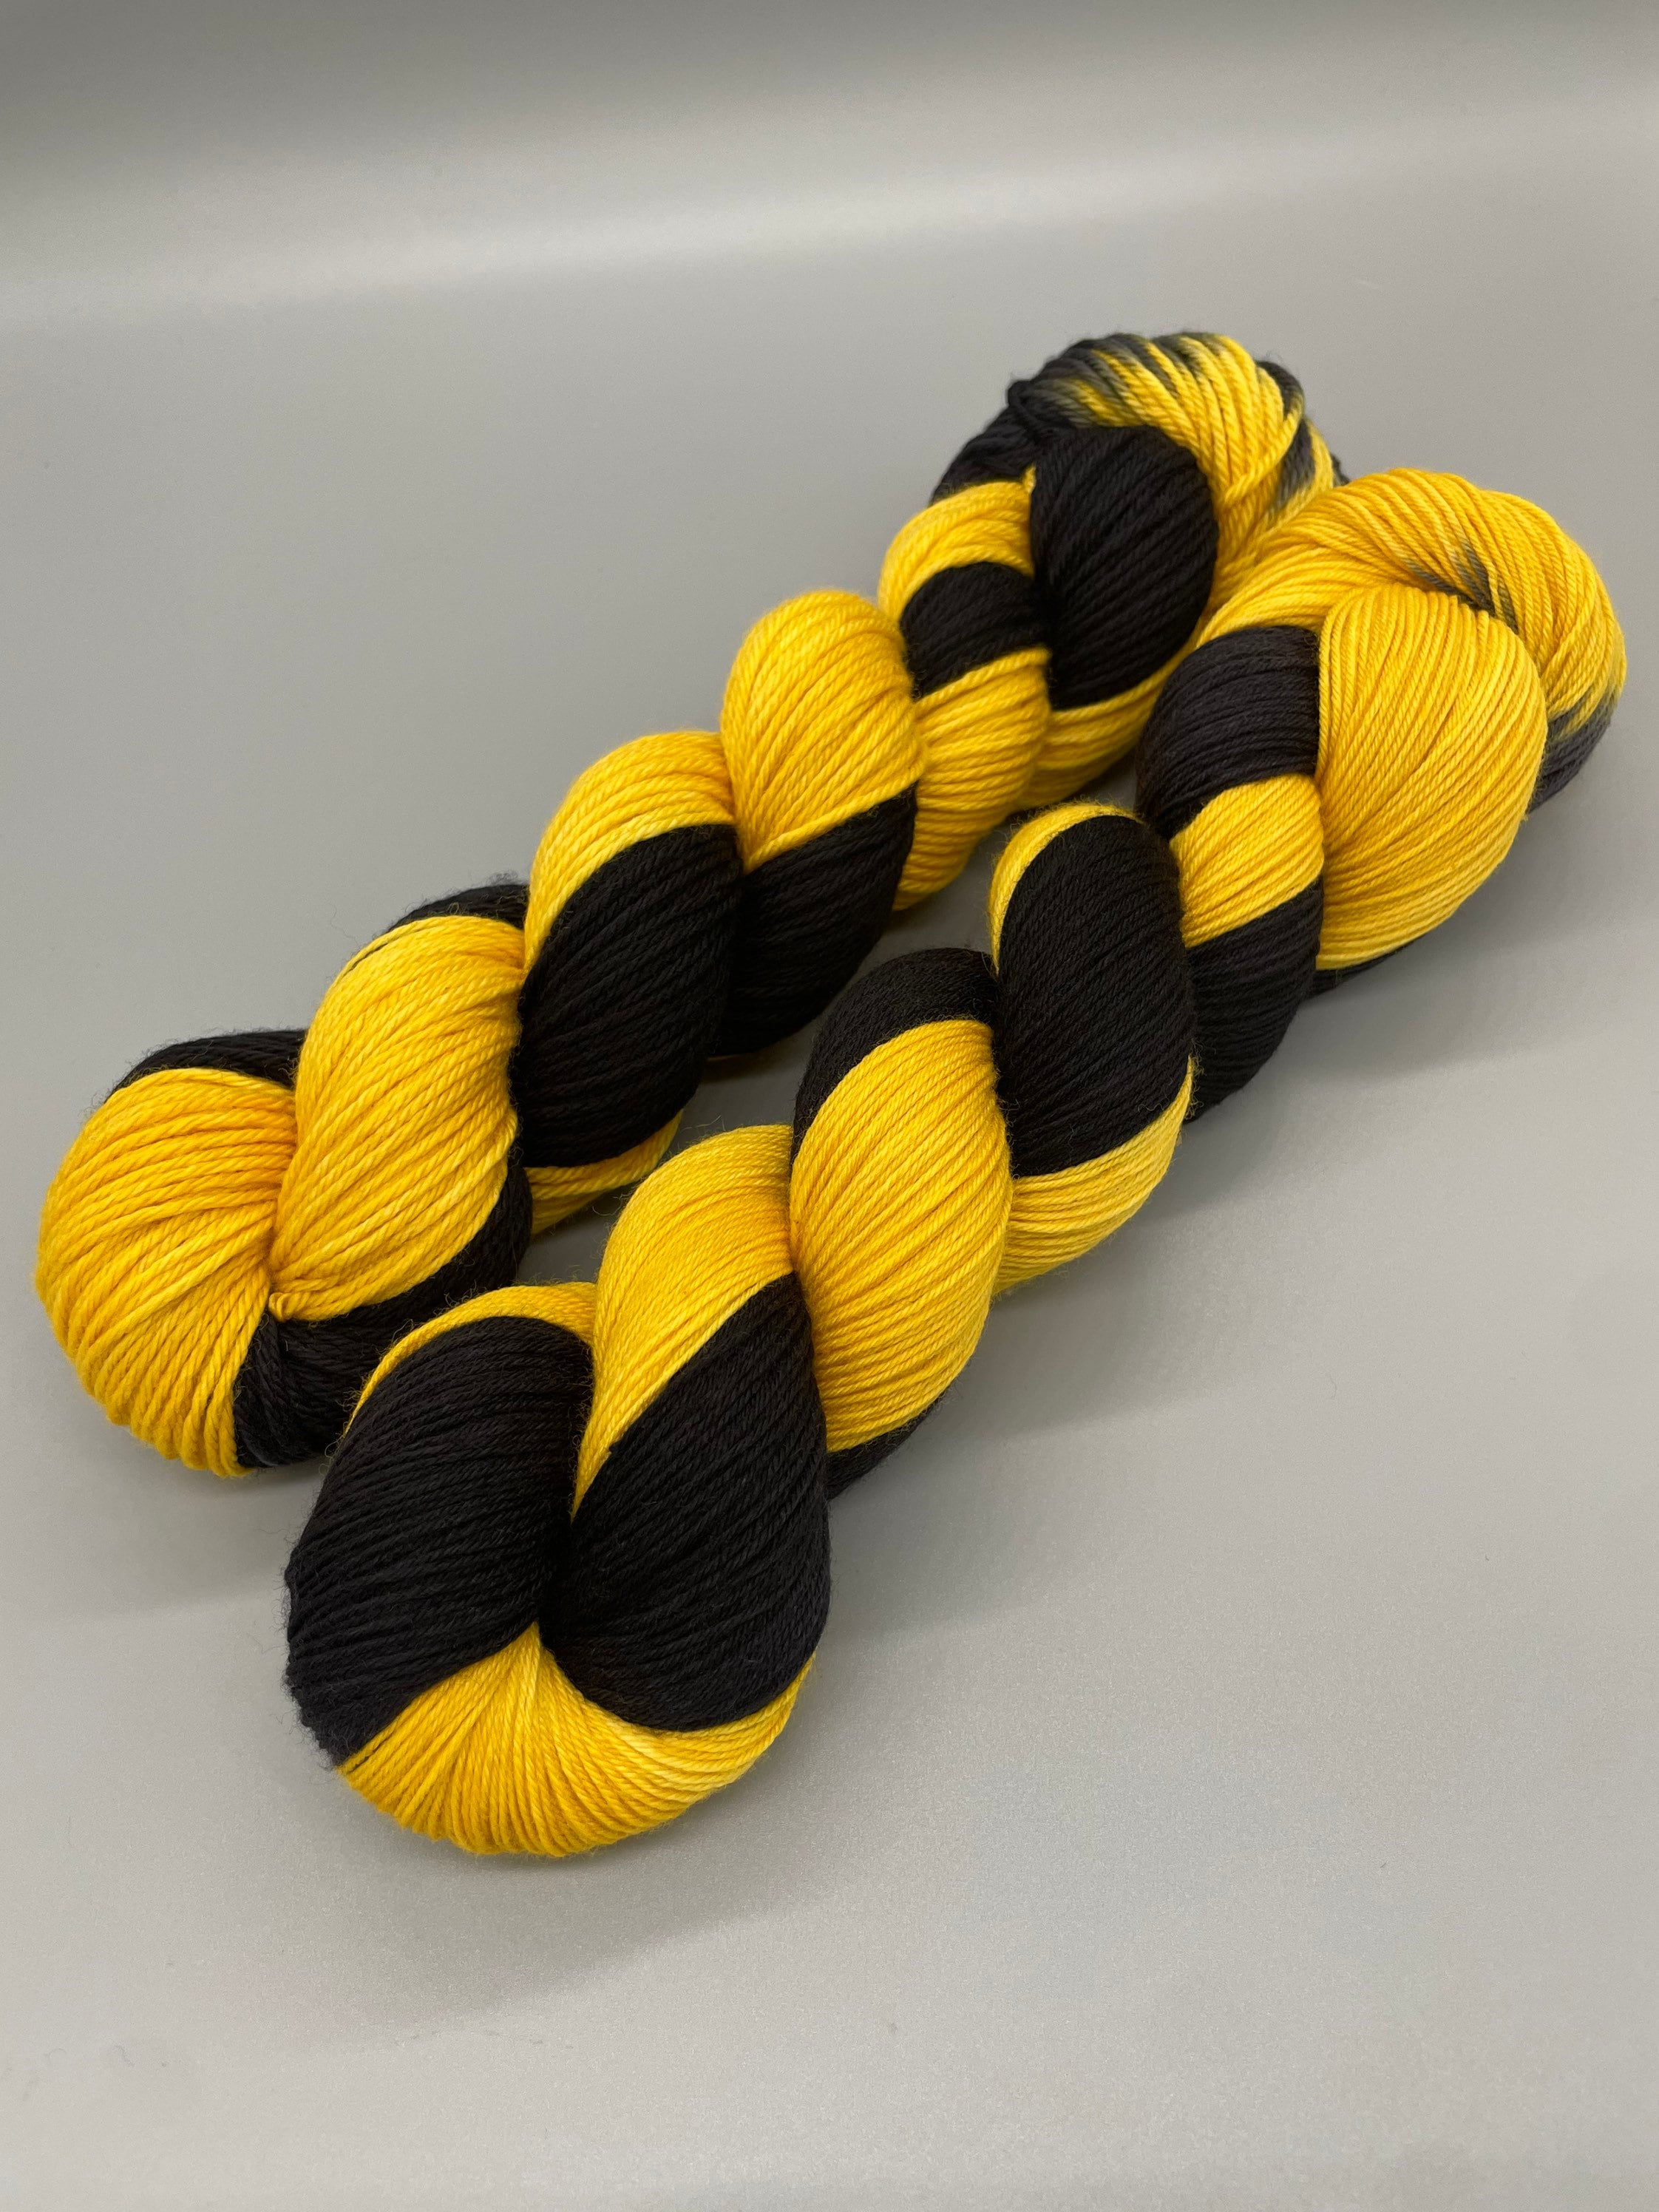 Hand Dyed Yarn. Worsted Weight Superwash Merino Wool. HONEY MUSTARD. Yellow  Gold Tonal Indie Dyer Knitting Yarn. Ready to Ship 